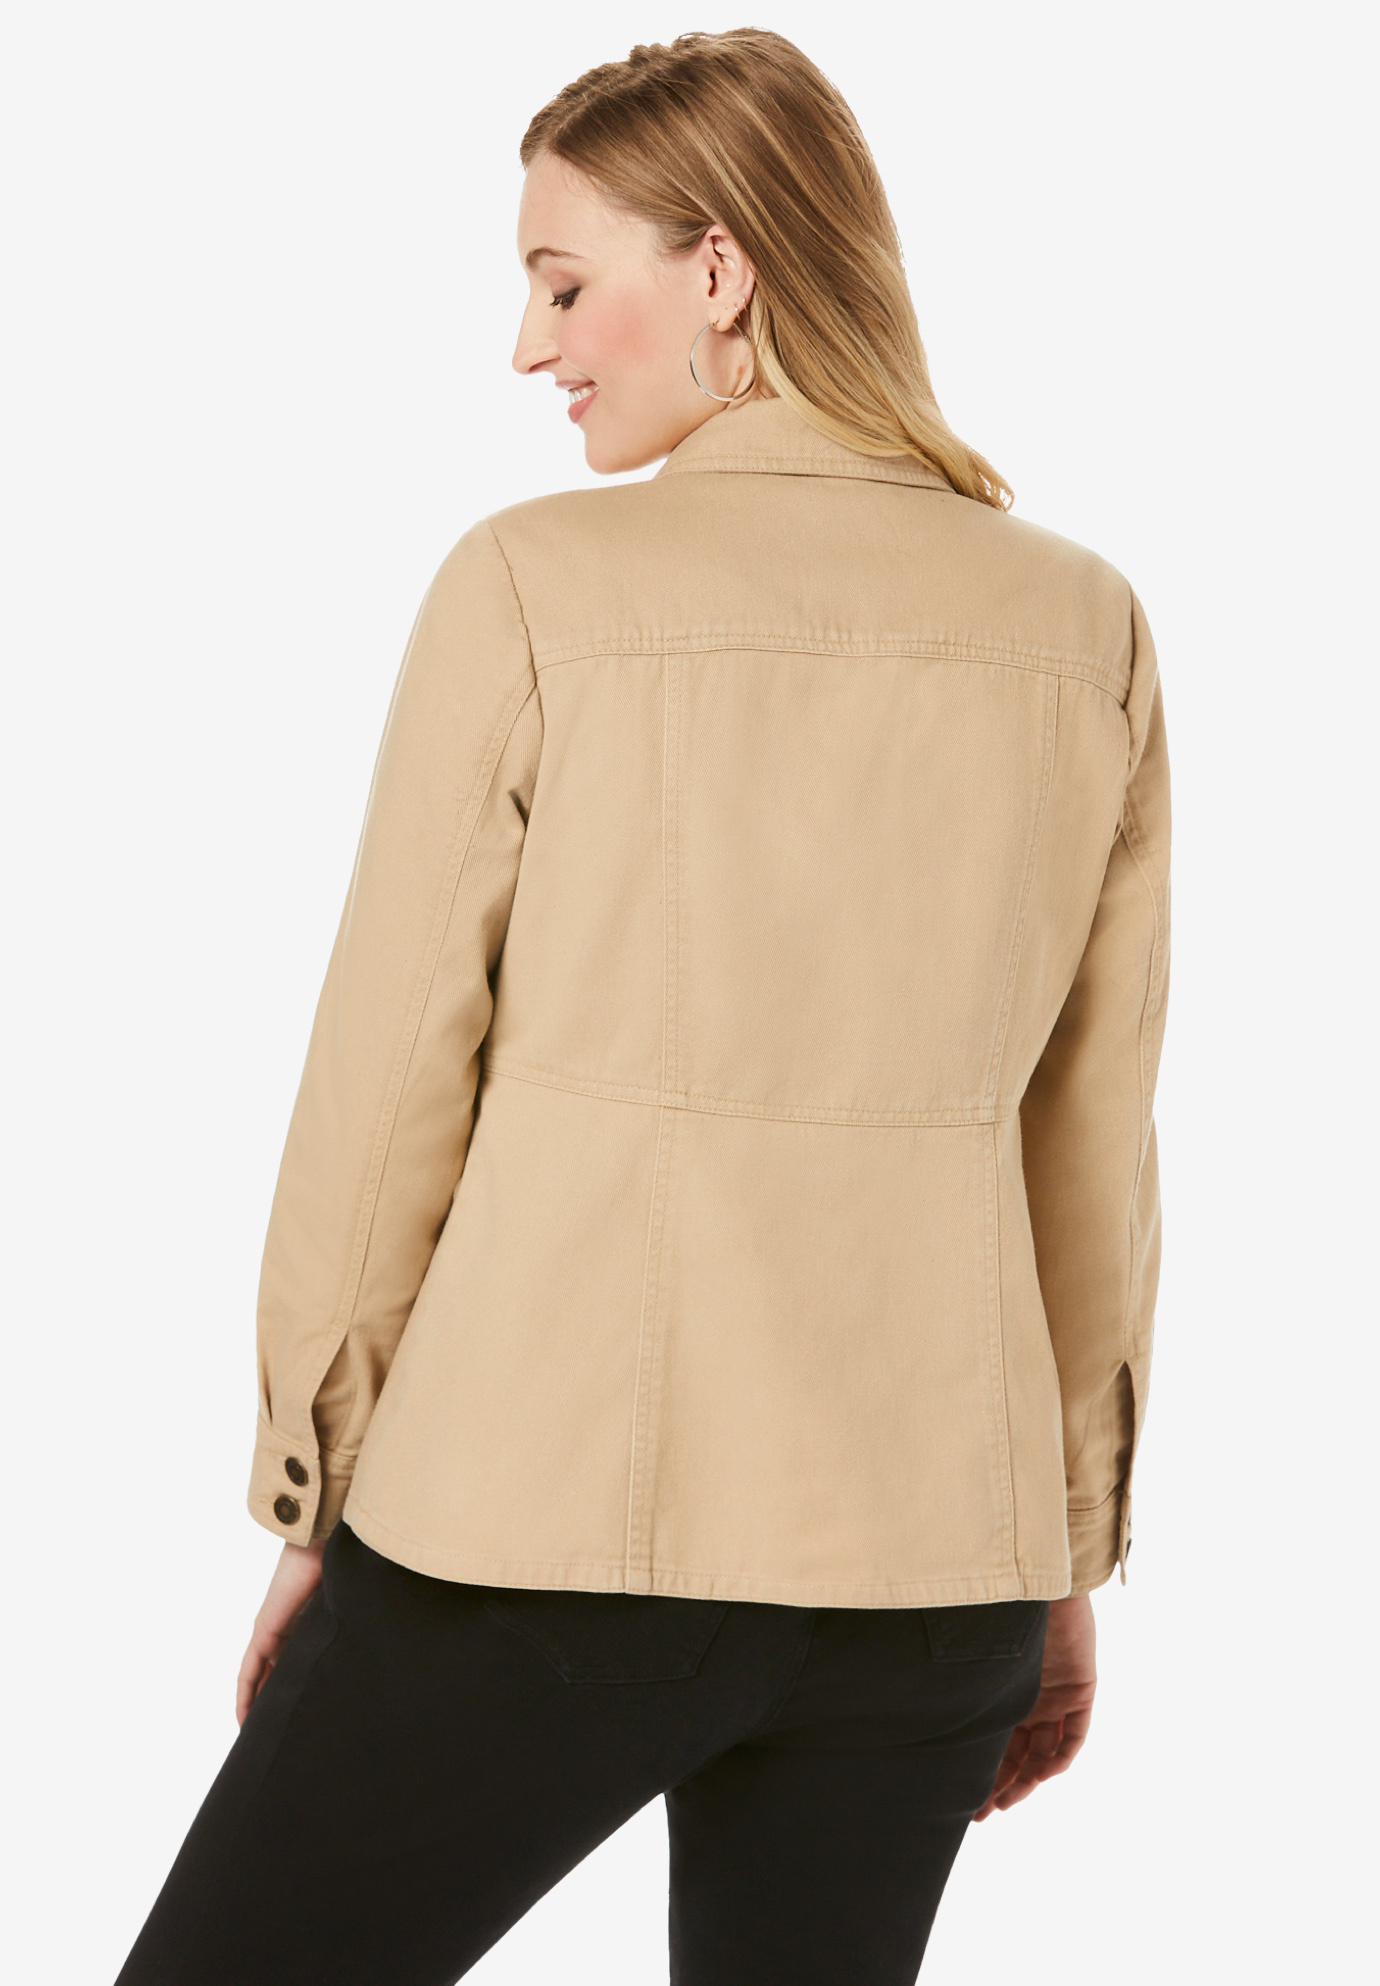 Jessica London Women's Plus Size Peplum Denim Jacket Feminine Jean Jacket - image 3 of 5